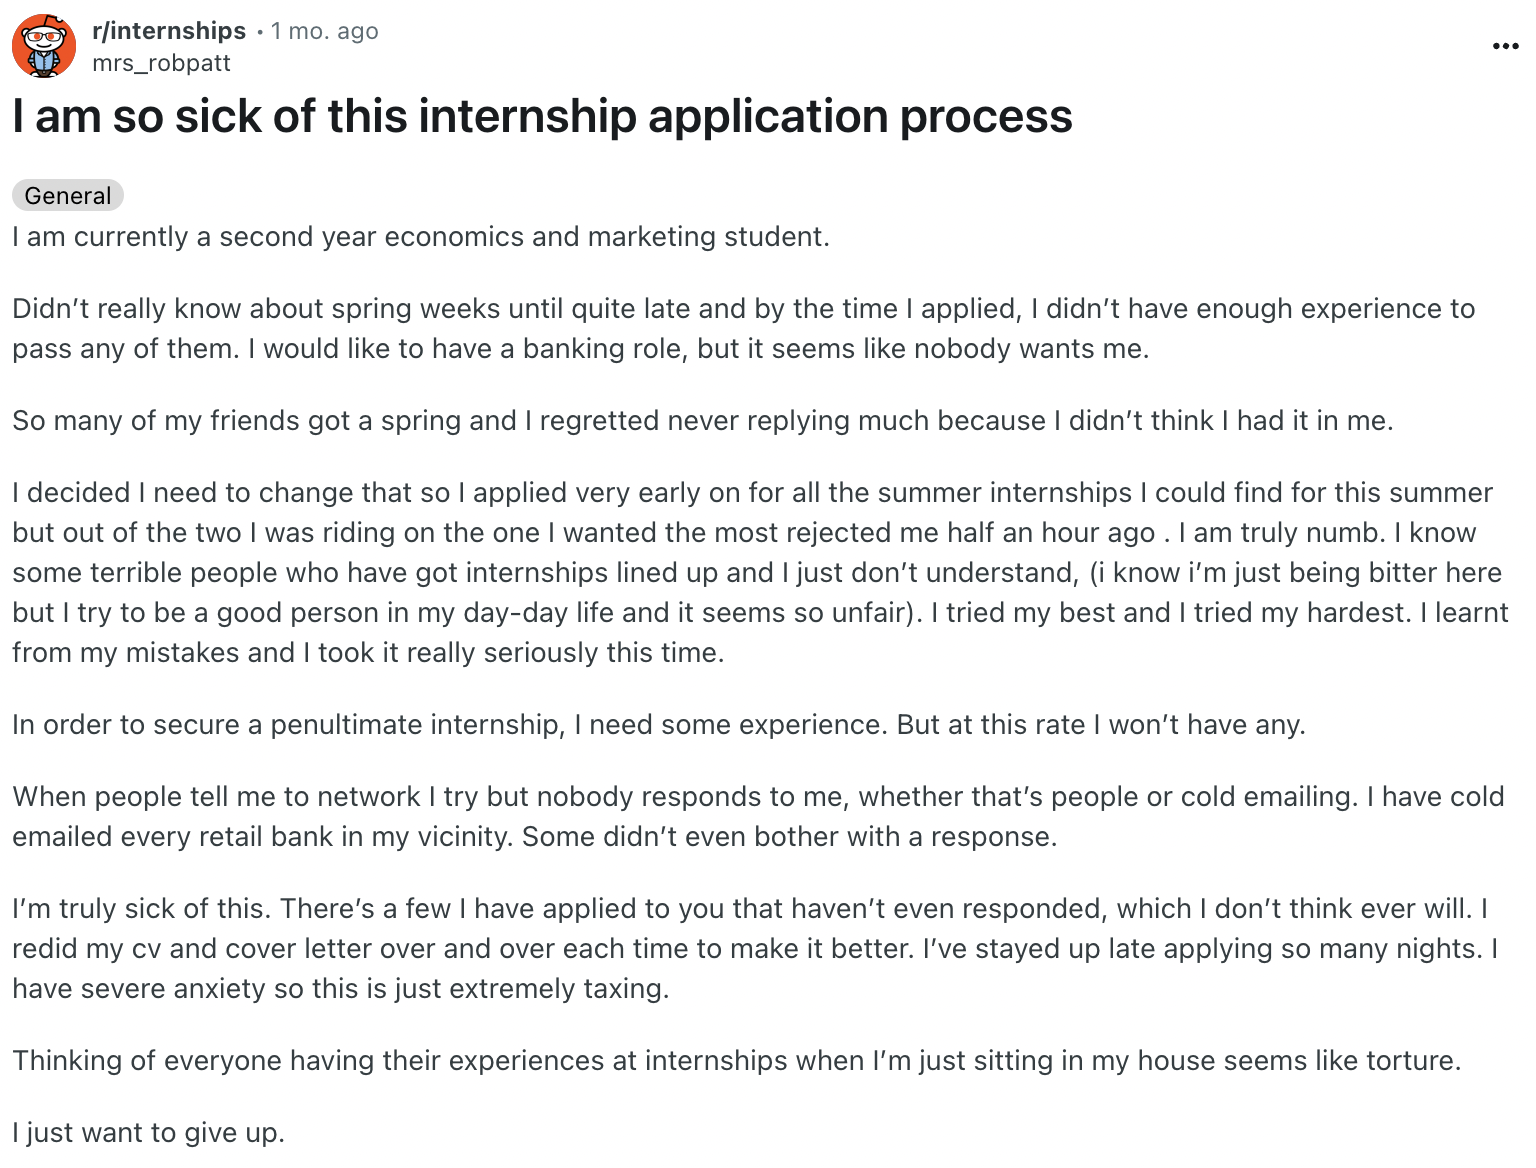 Sick of the internships application process